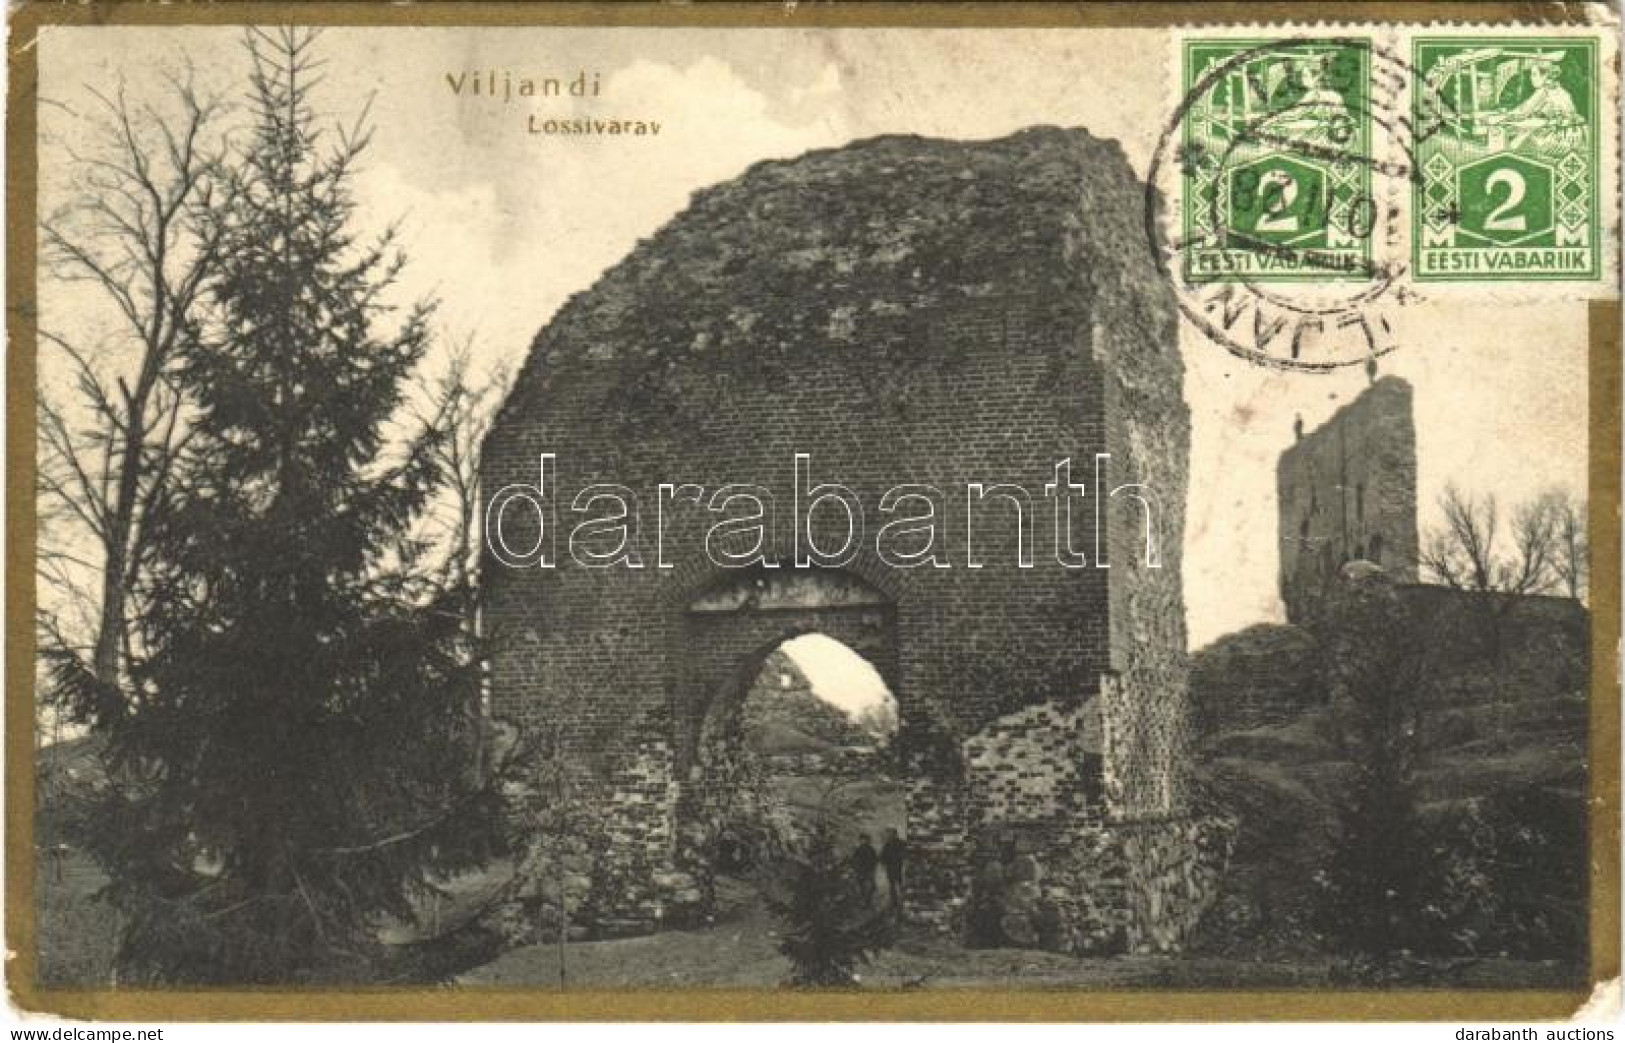 T2/T3 1928 Viljandi, Lossivarav / Castle Ruins. TCV Card (EK) - Unclassified